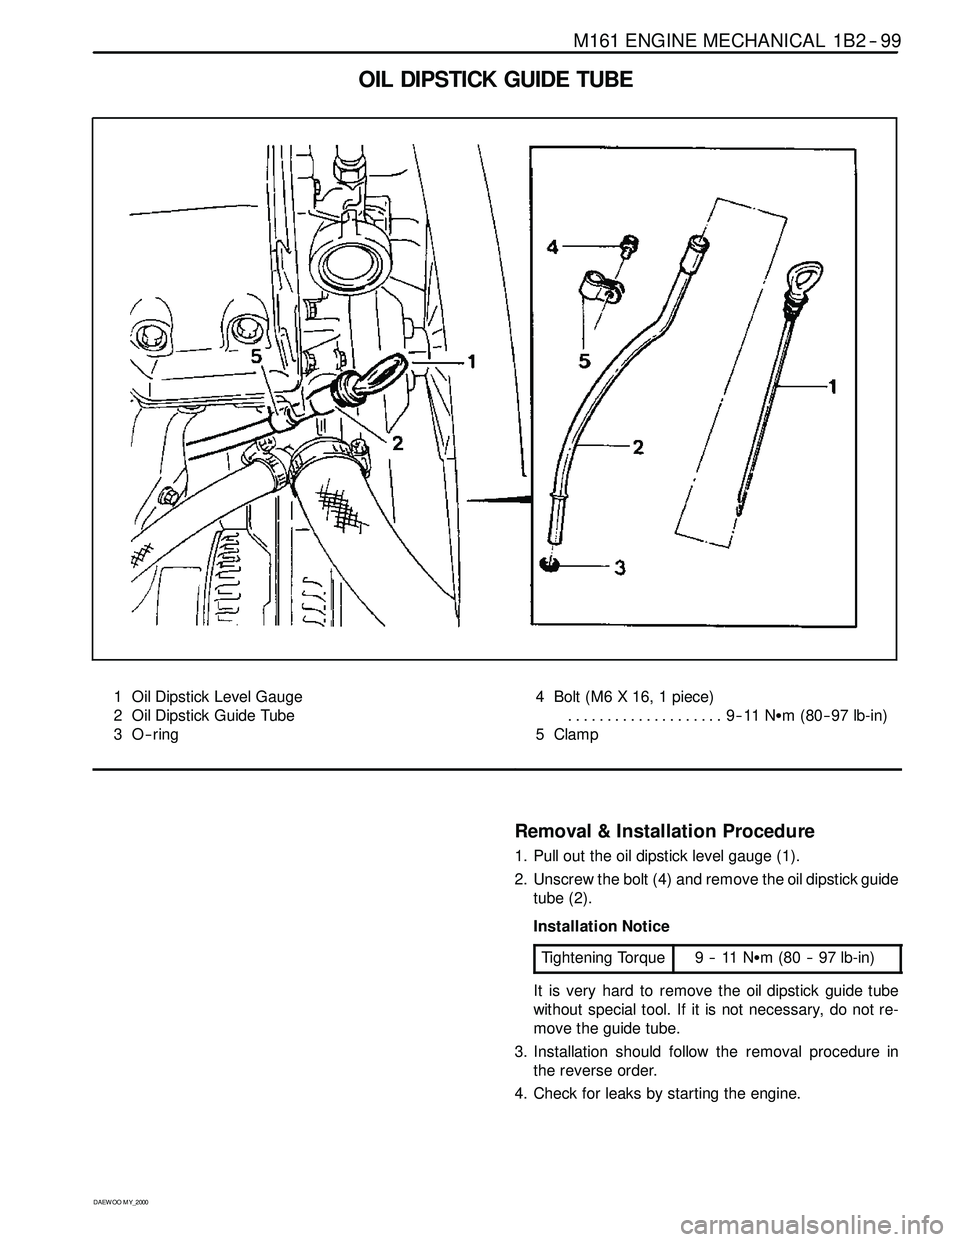 SSANGYONG KORANDO 1997  Service Repair Manual M161 ENGINE MECHANICAL 1B2 -- 99
D AEW OO M Y_2000
OIL DIPSTICK GUIDE TUBE
1 Oil Dipstick Level Gauge
2 Oil Dipstick Guide Tube
3O--ring4 Bolt (M6 X 16, 1 piece)
9--11 NSm (80-- 97 lb-in) ............